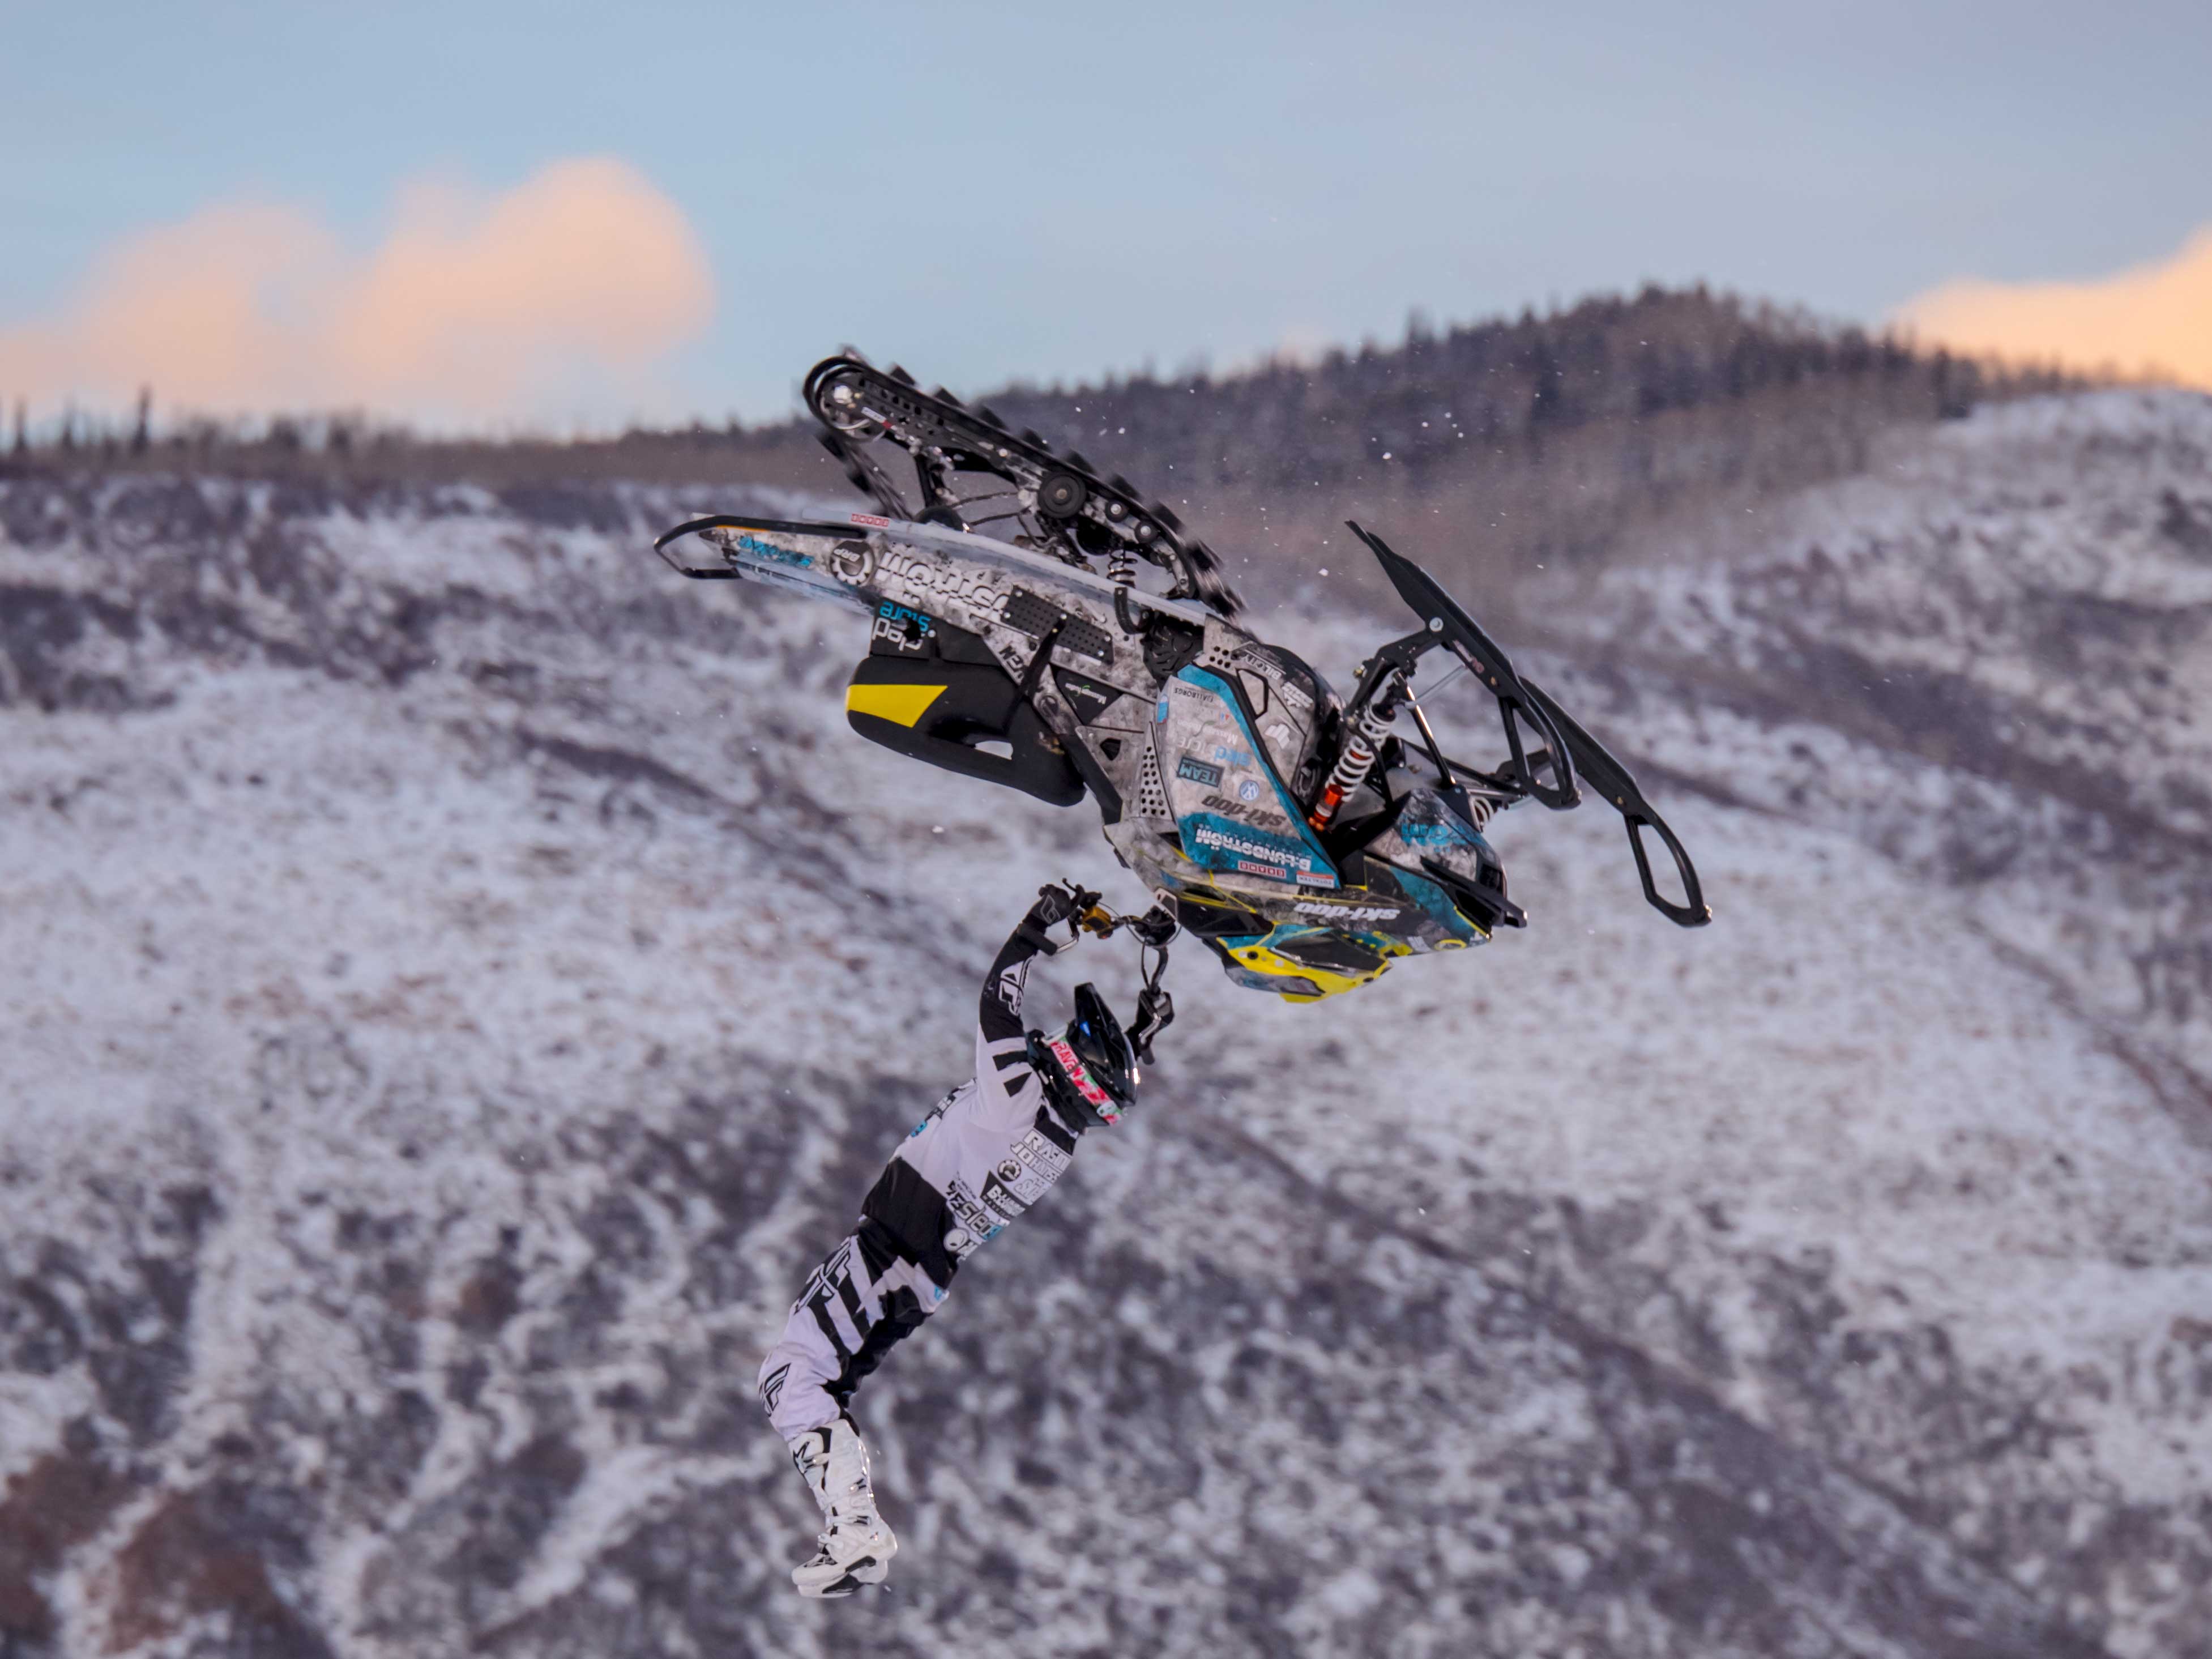 Rasmus Johansson flipping with his Ski-Doo